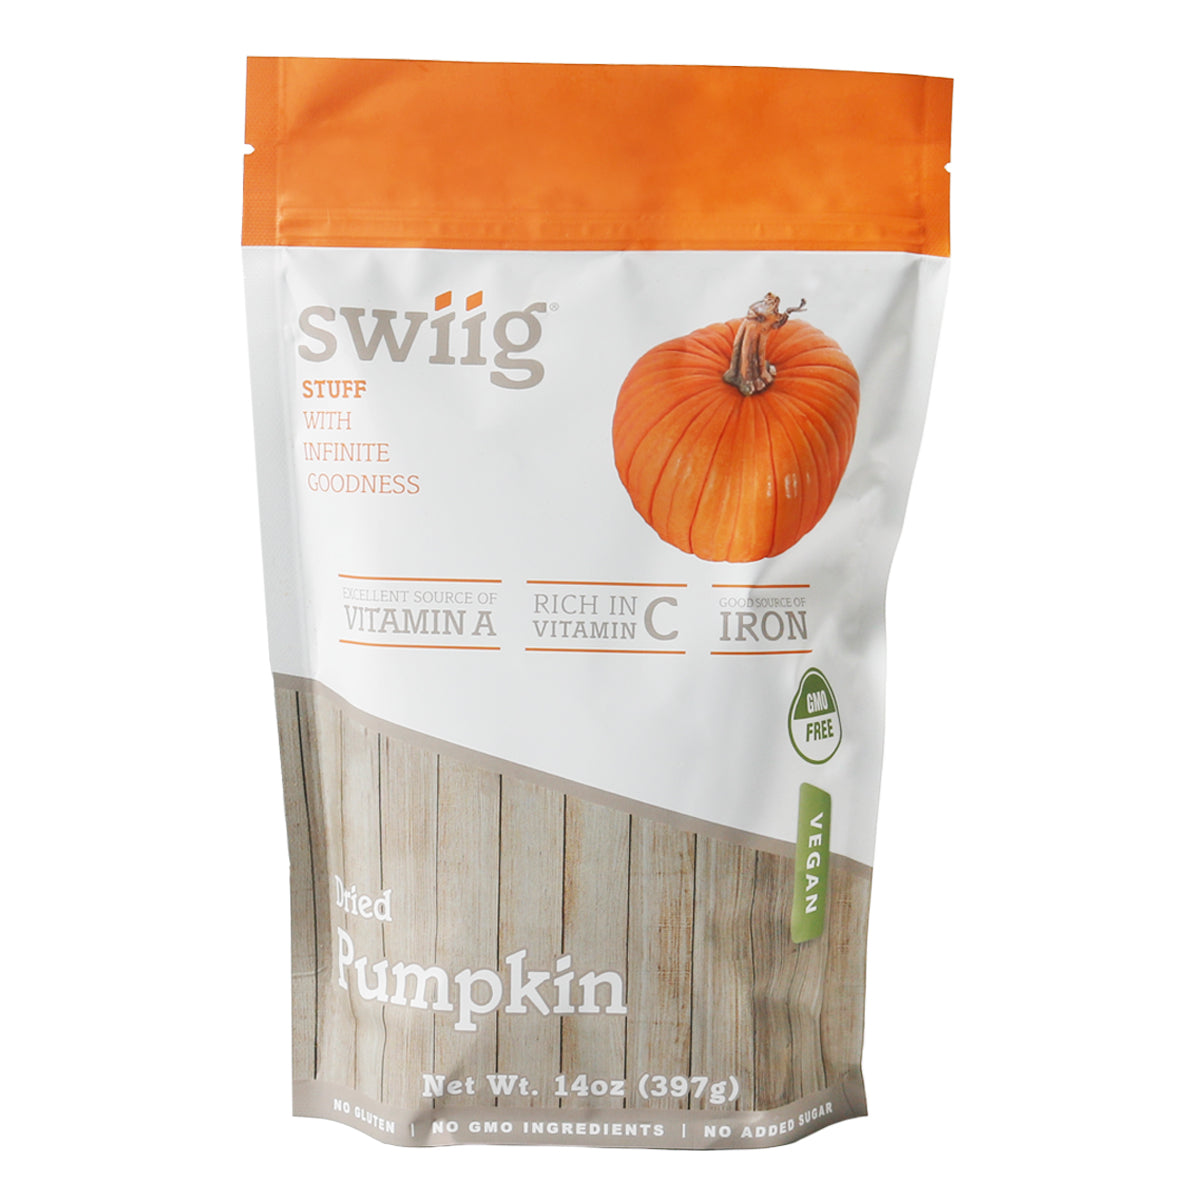 Dried, Ground Pumpkin - 14oz Bag - swiig